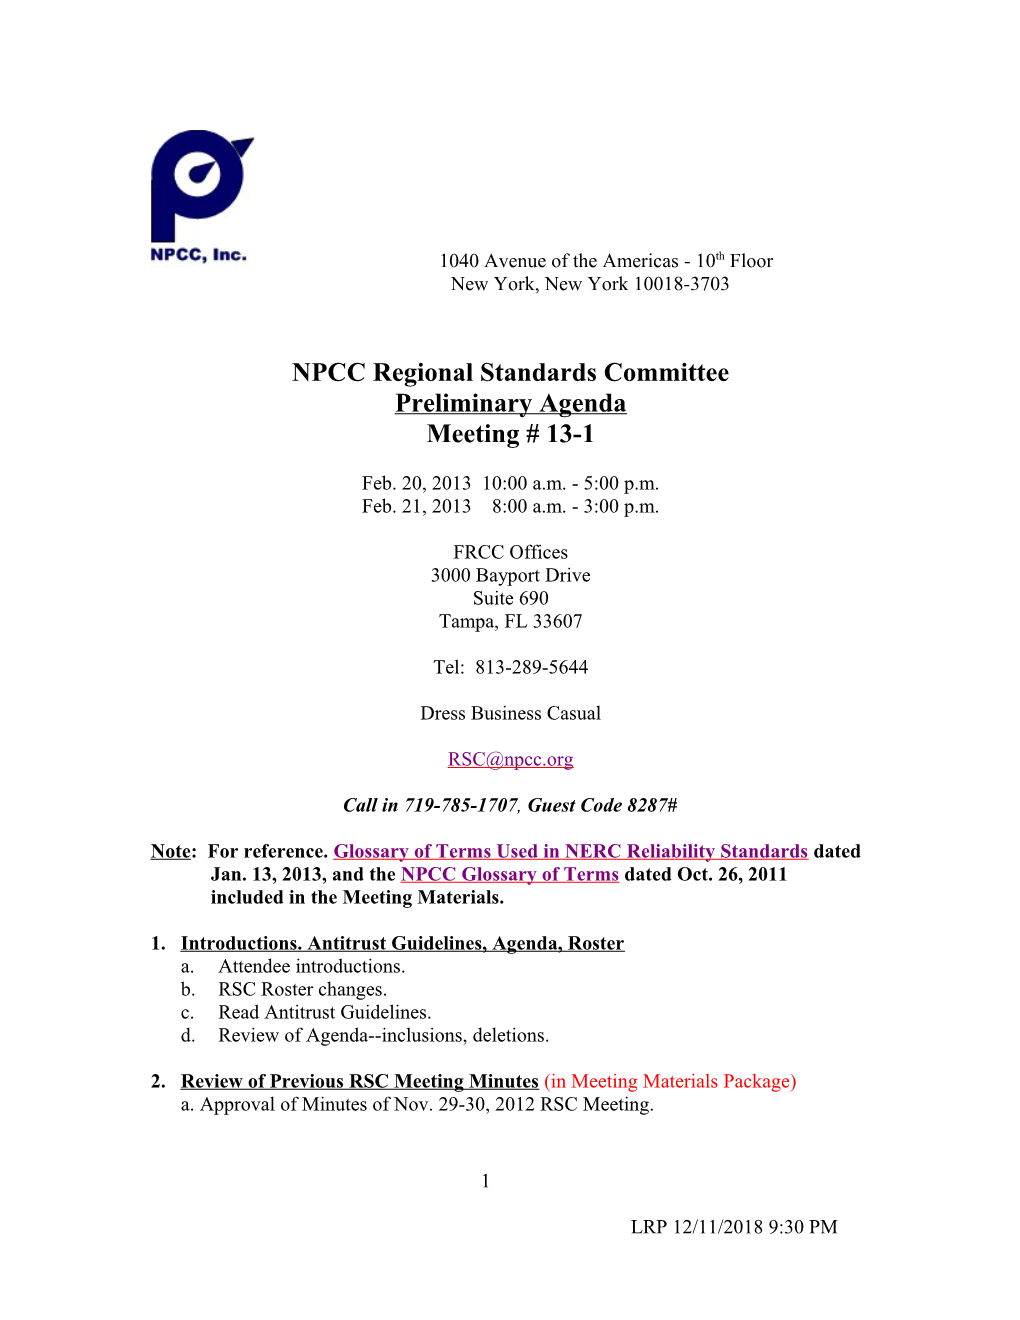 RSC 2-20-13 Meeting Preliminary Agenda 2-14-13